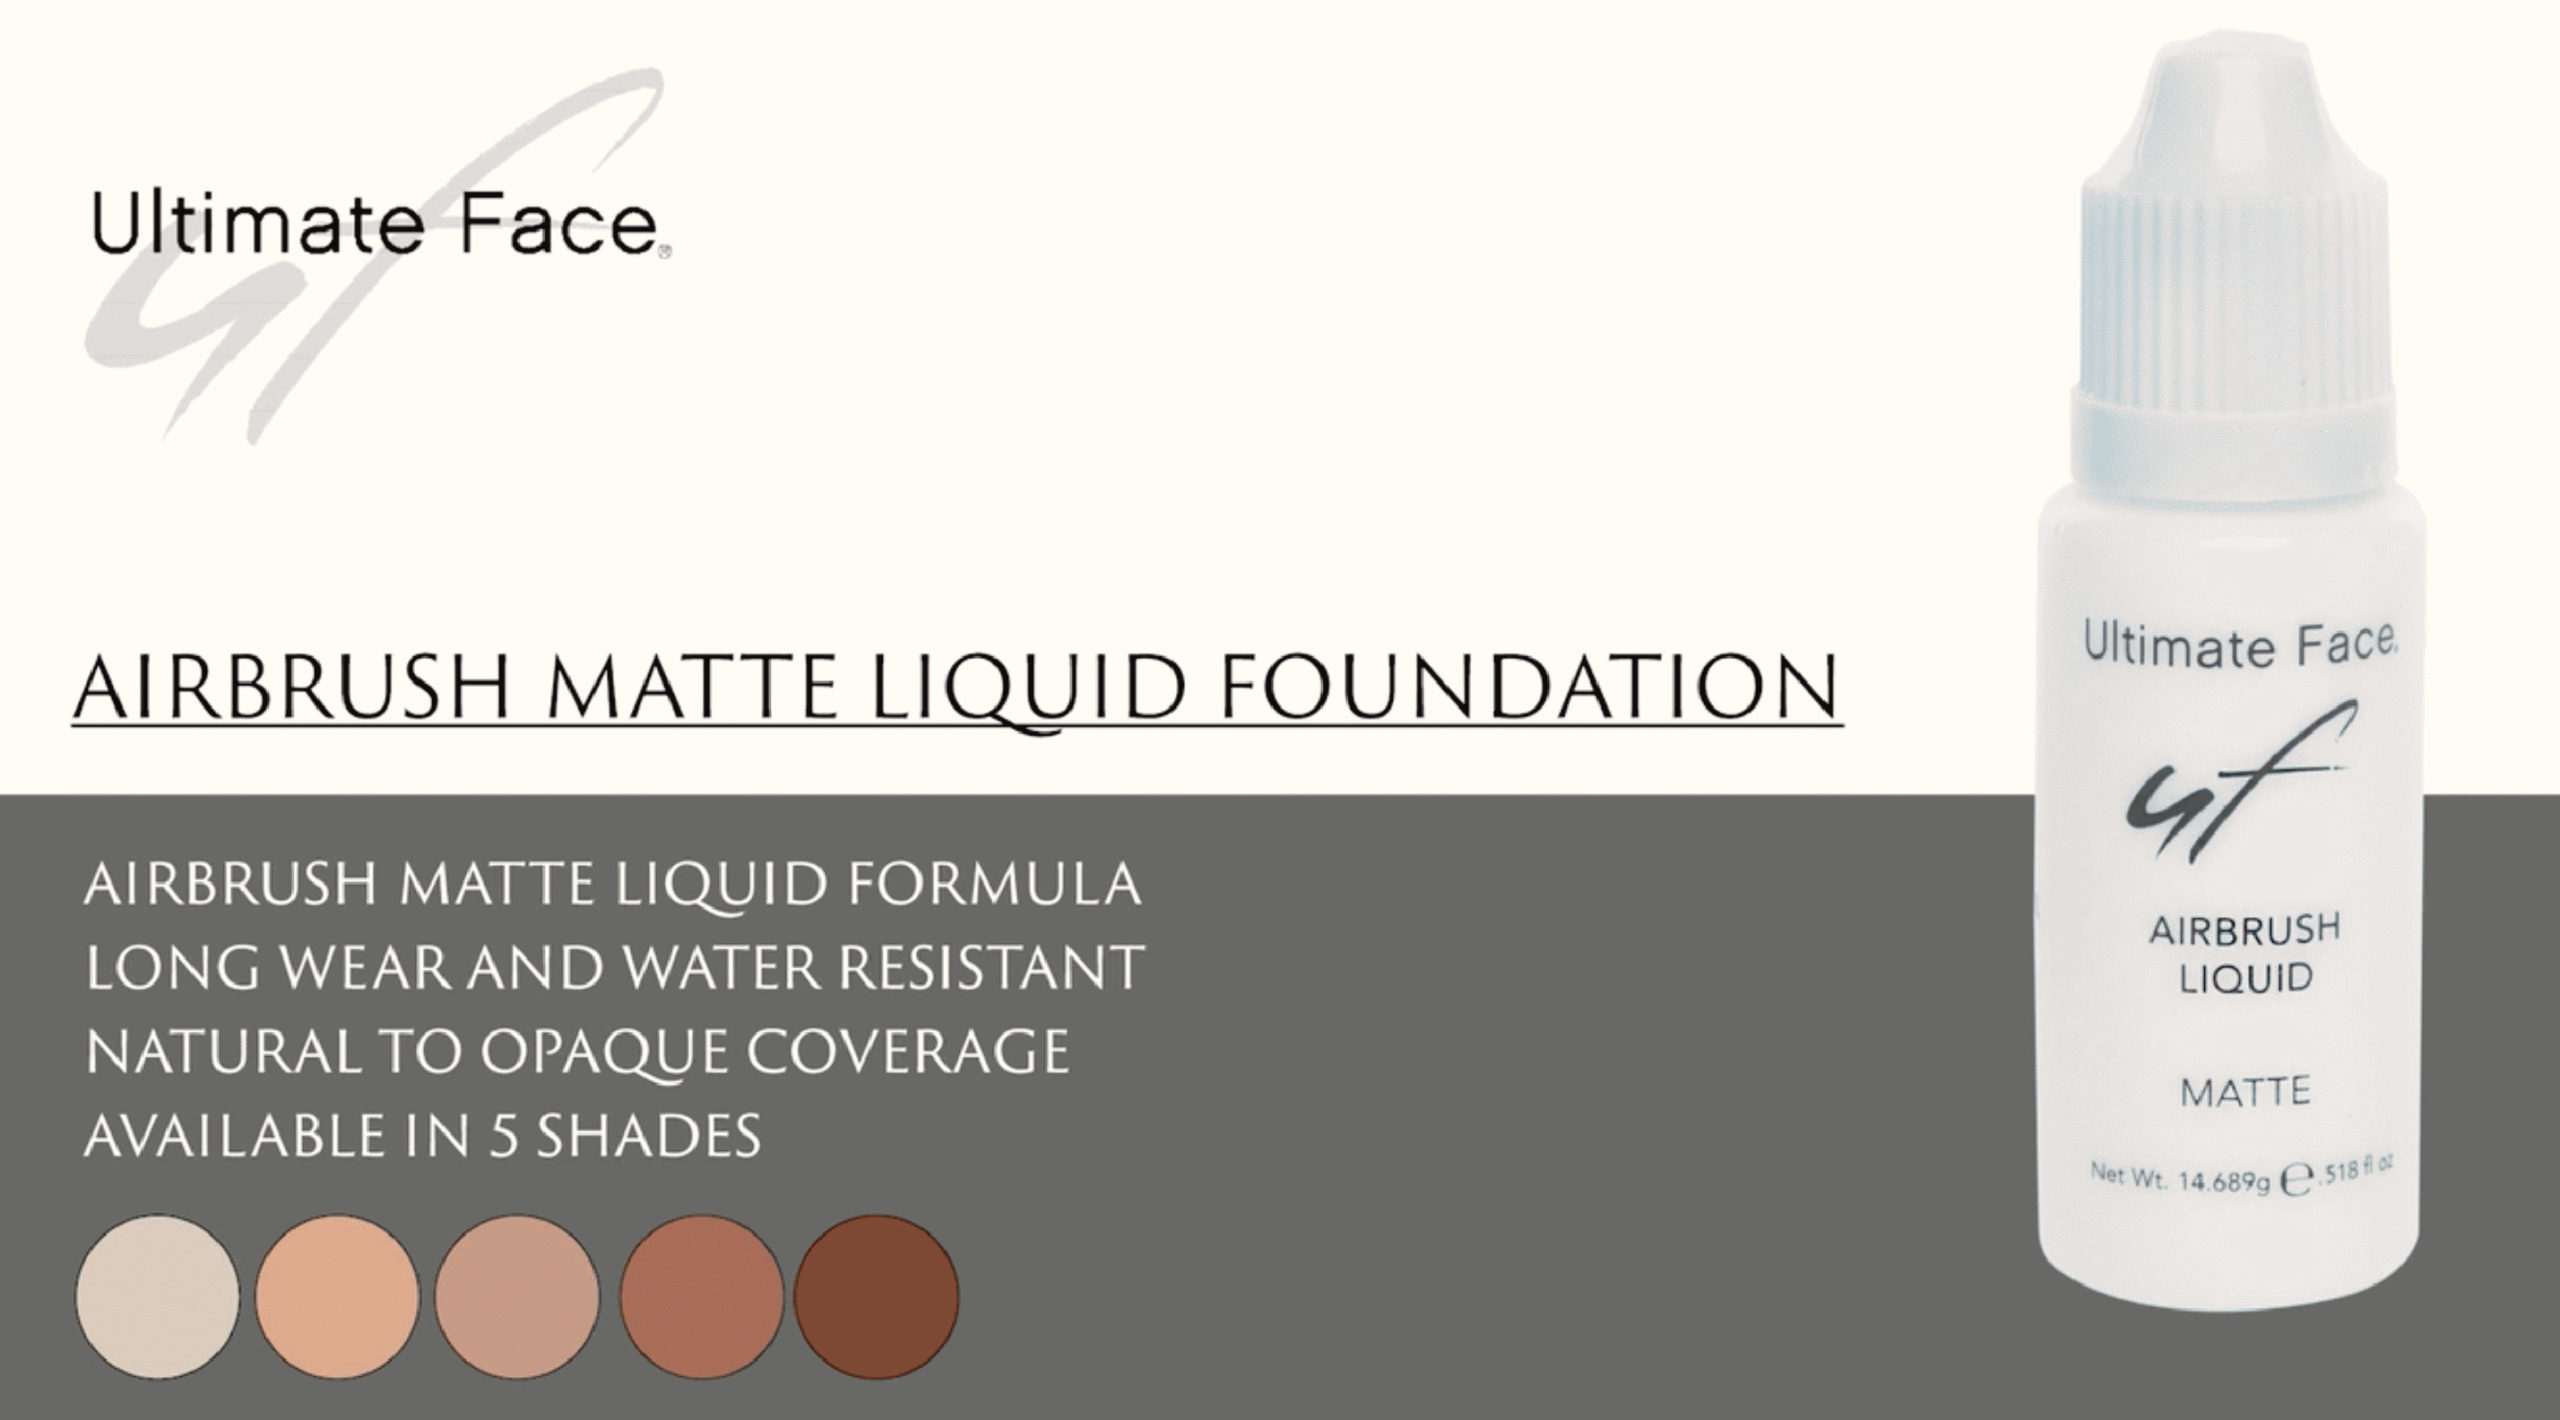 Ultimate Face Airbrush Matte Liquid Foundation